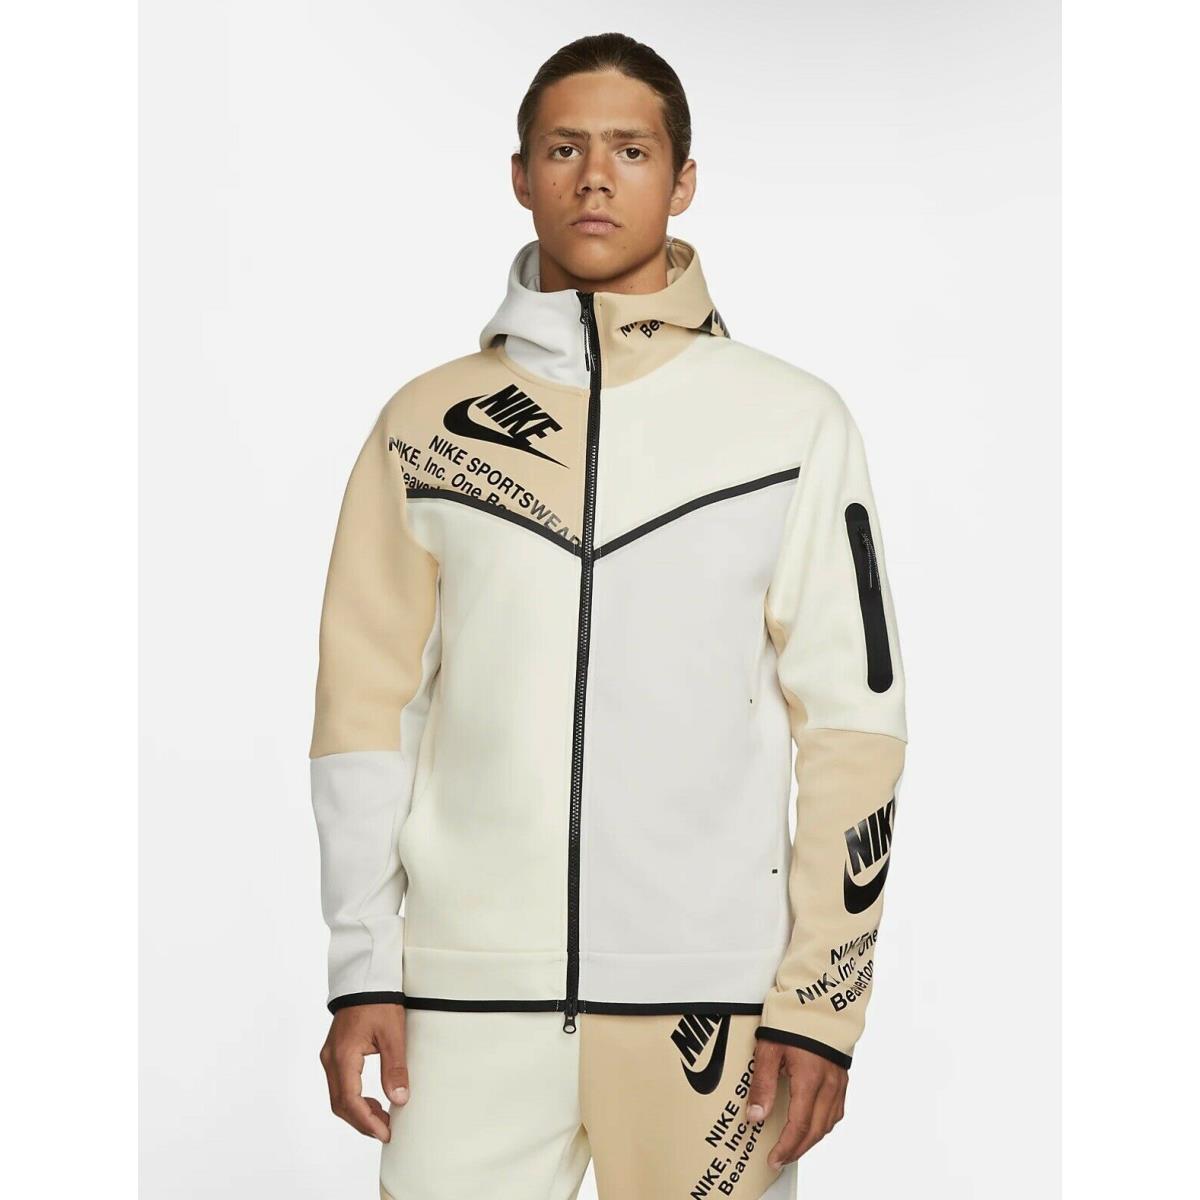 Nike Tech Fleece Windrunner Full Zip Graphic Hoodie Jacket DM6474-072 Sz M L XL